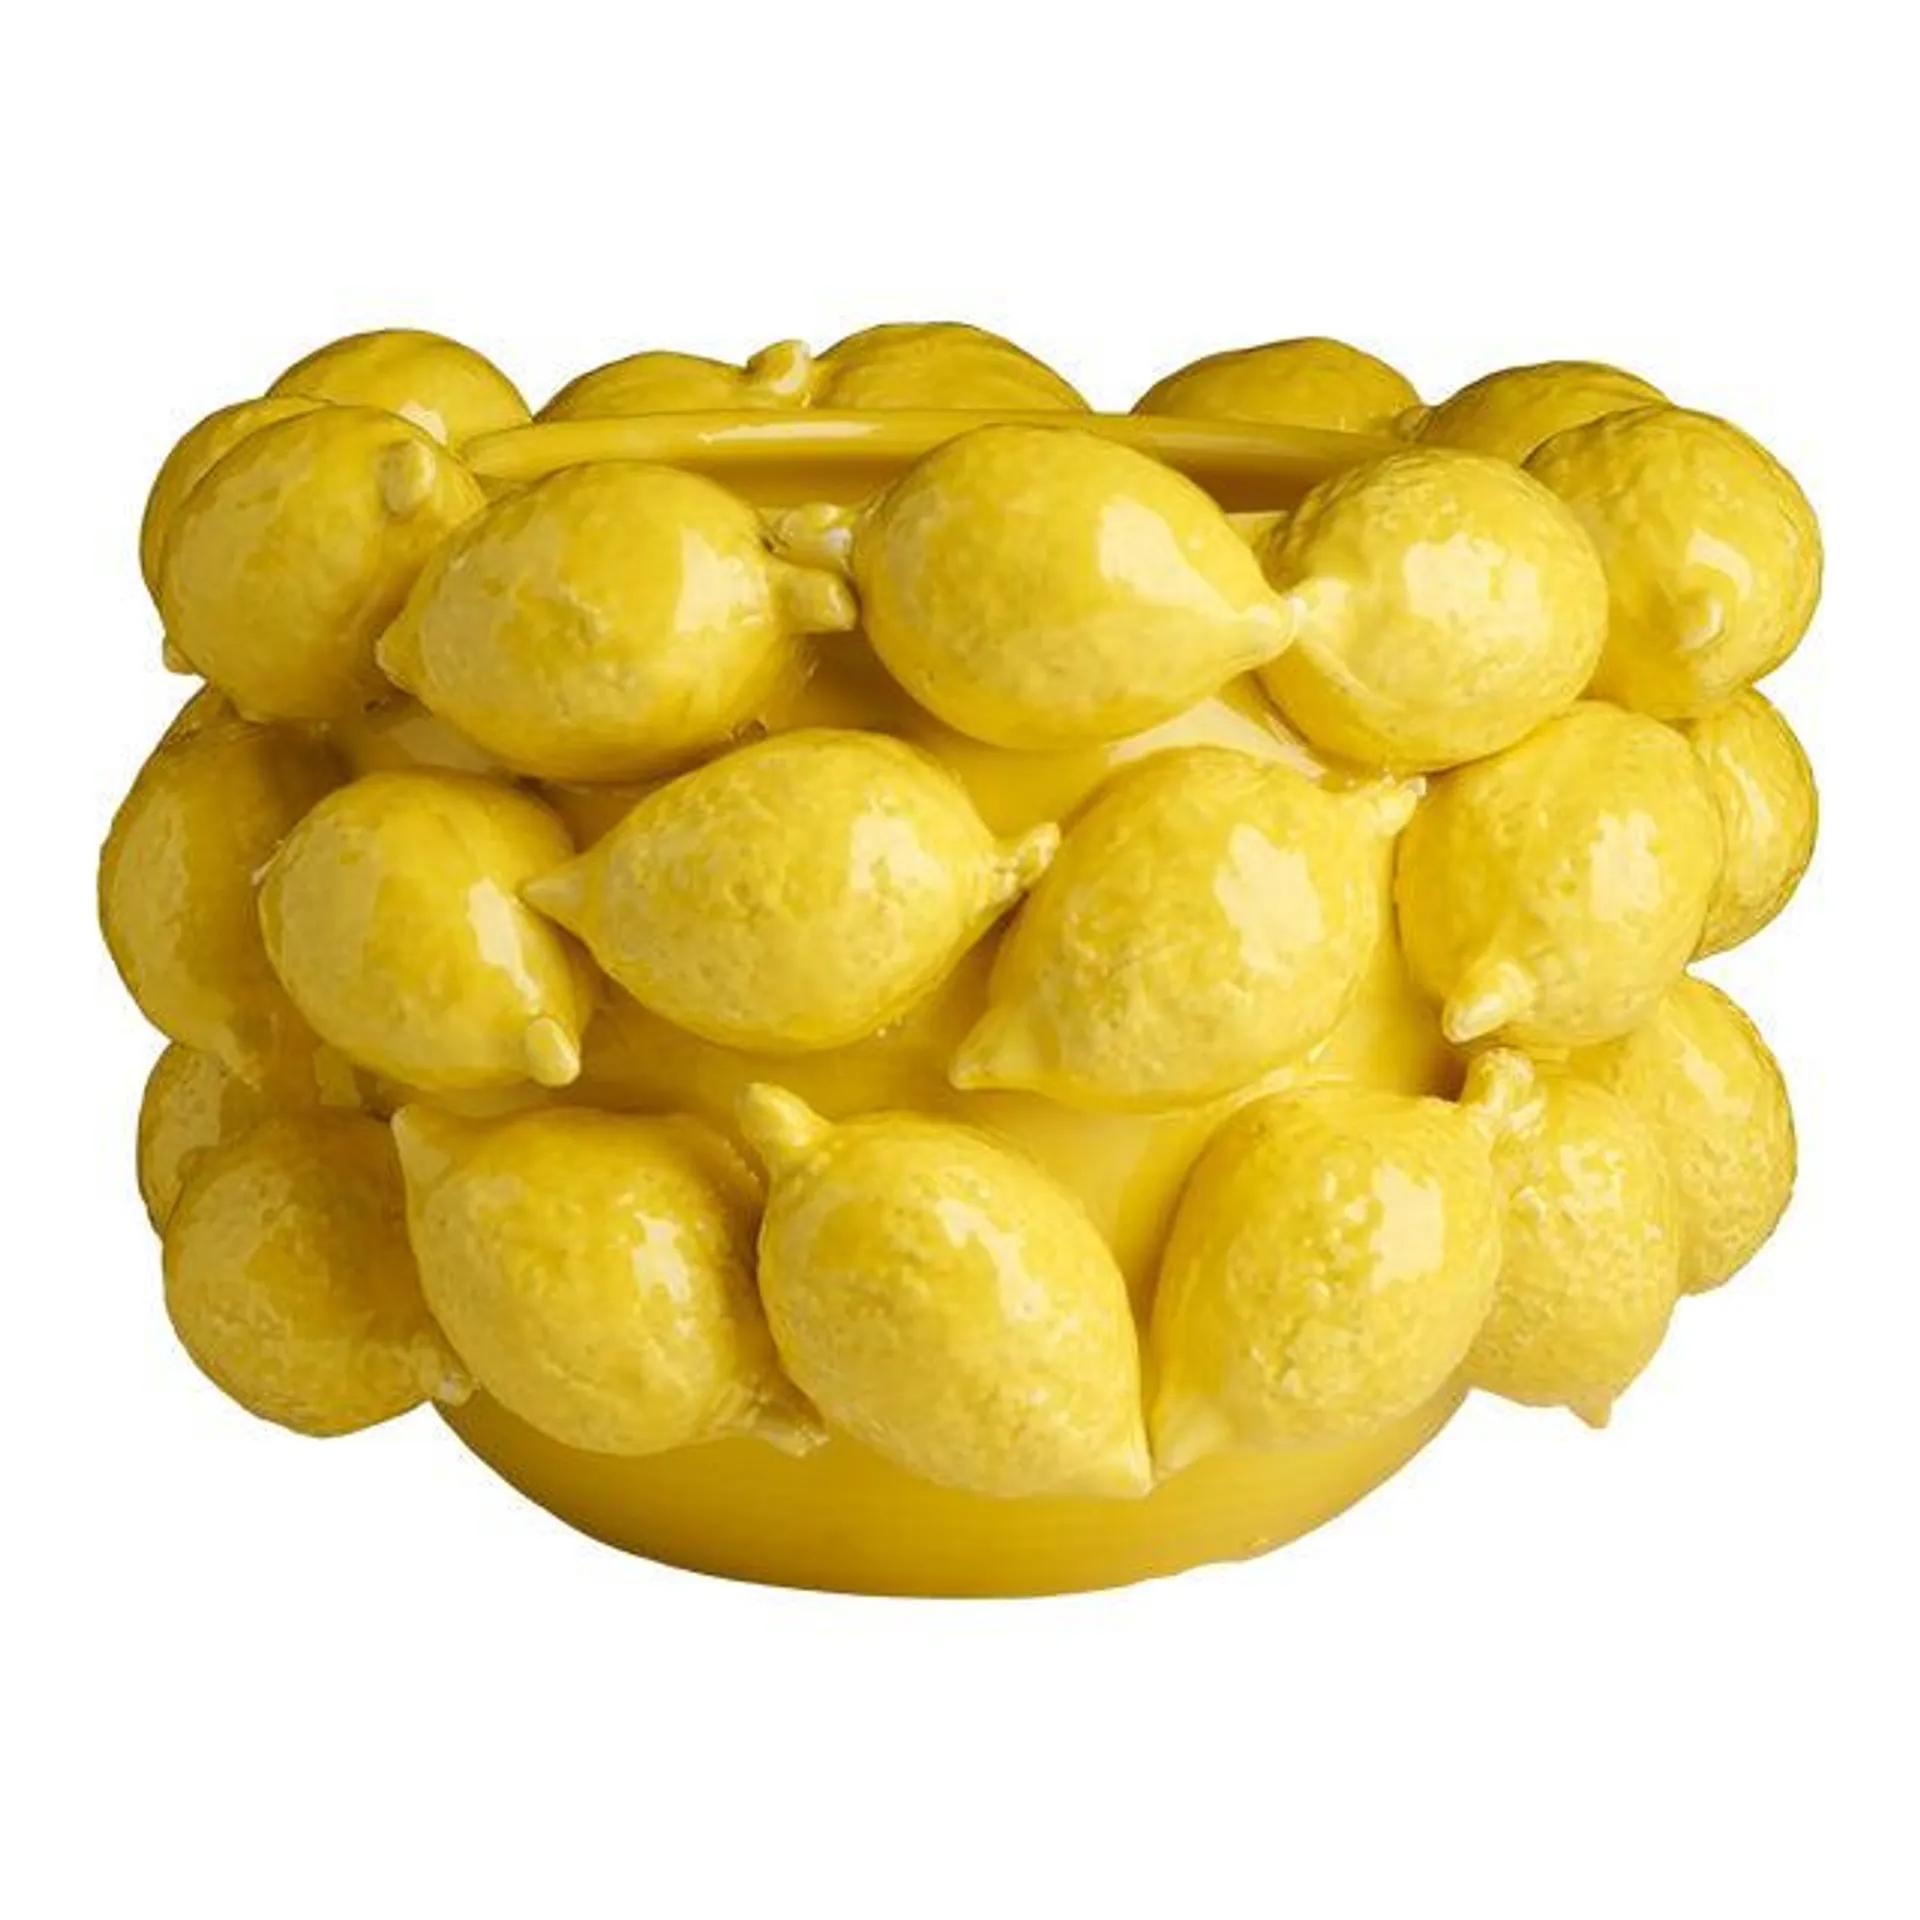 Ceramic Lemon Planter, Yellow